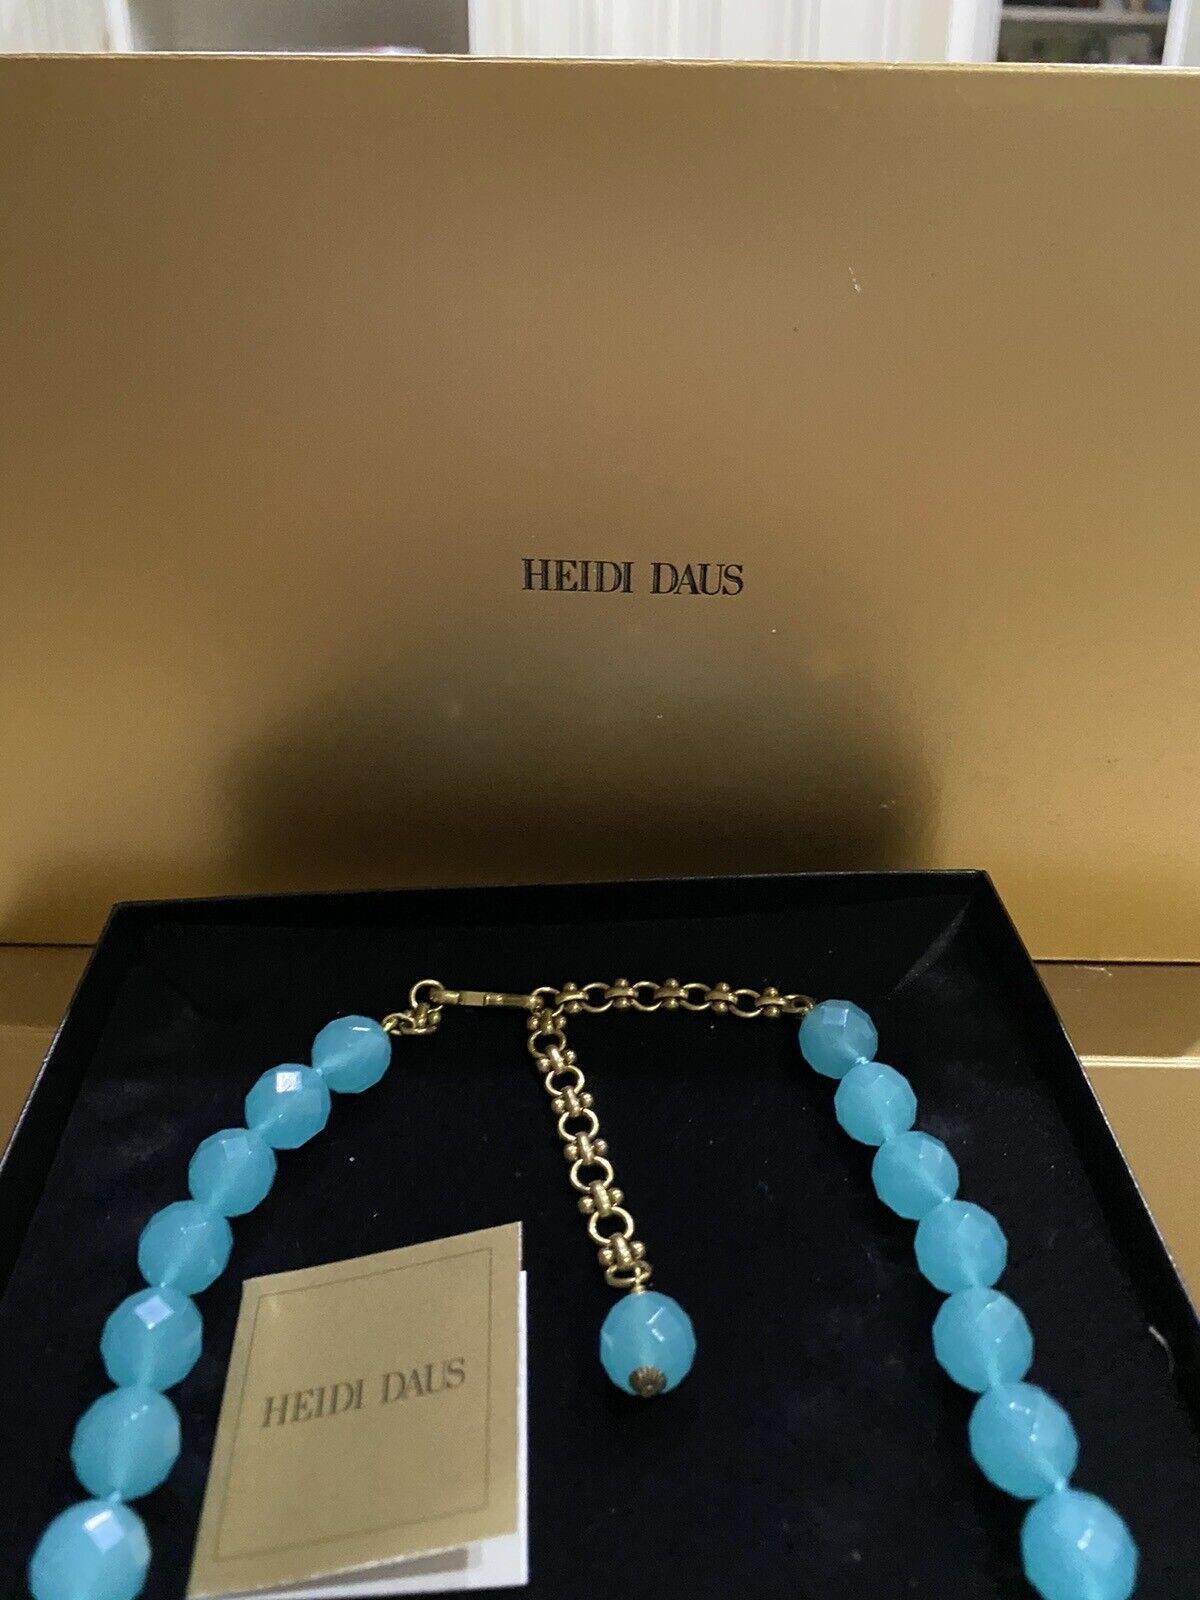 heidi daus heart necklace